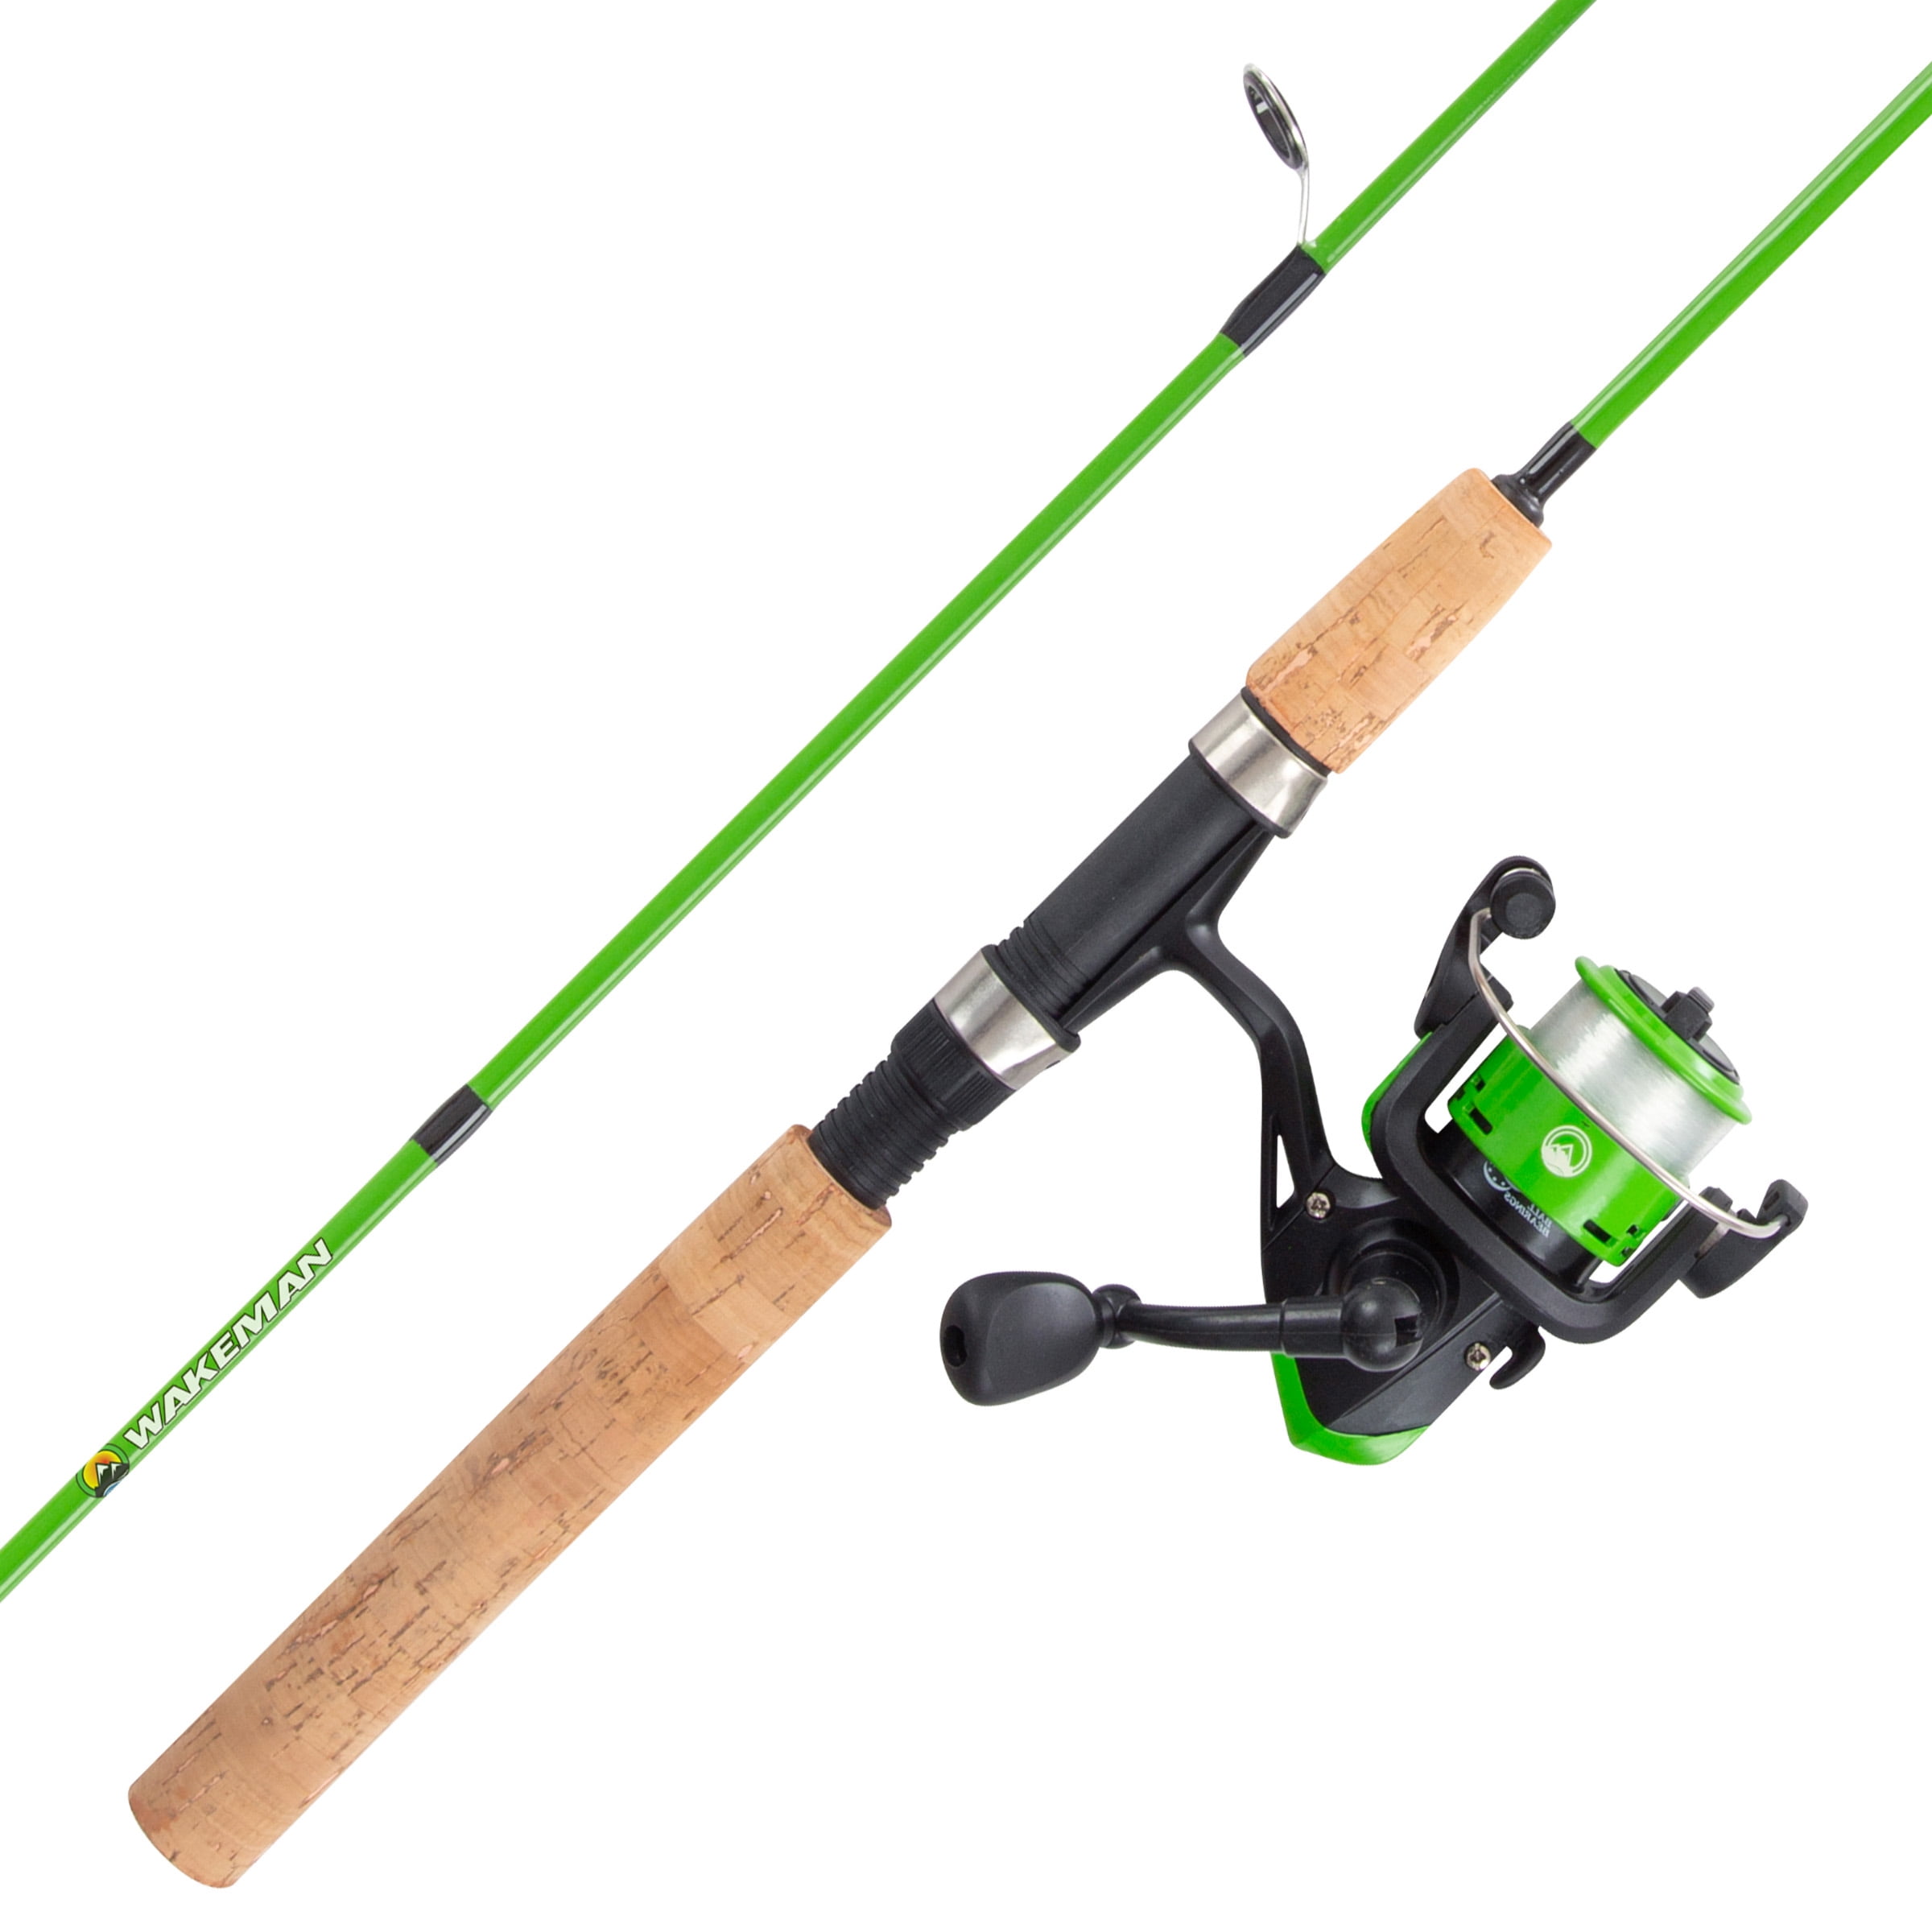 Rad Sportz Spinning Fishing Rod & Reel Combo- Starter Set- 5’2” Fiberglass Pole, Green, 52 by xpwholesale